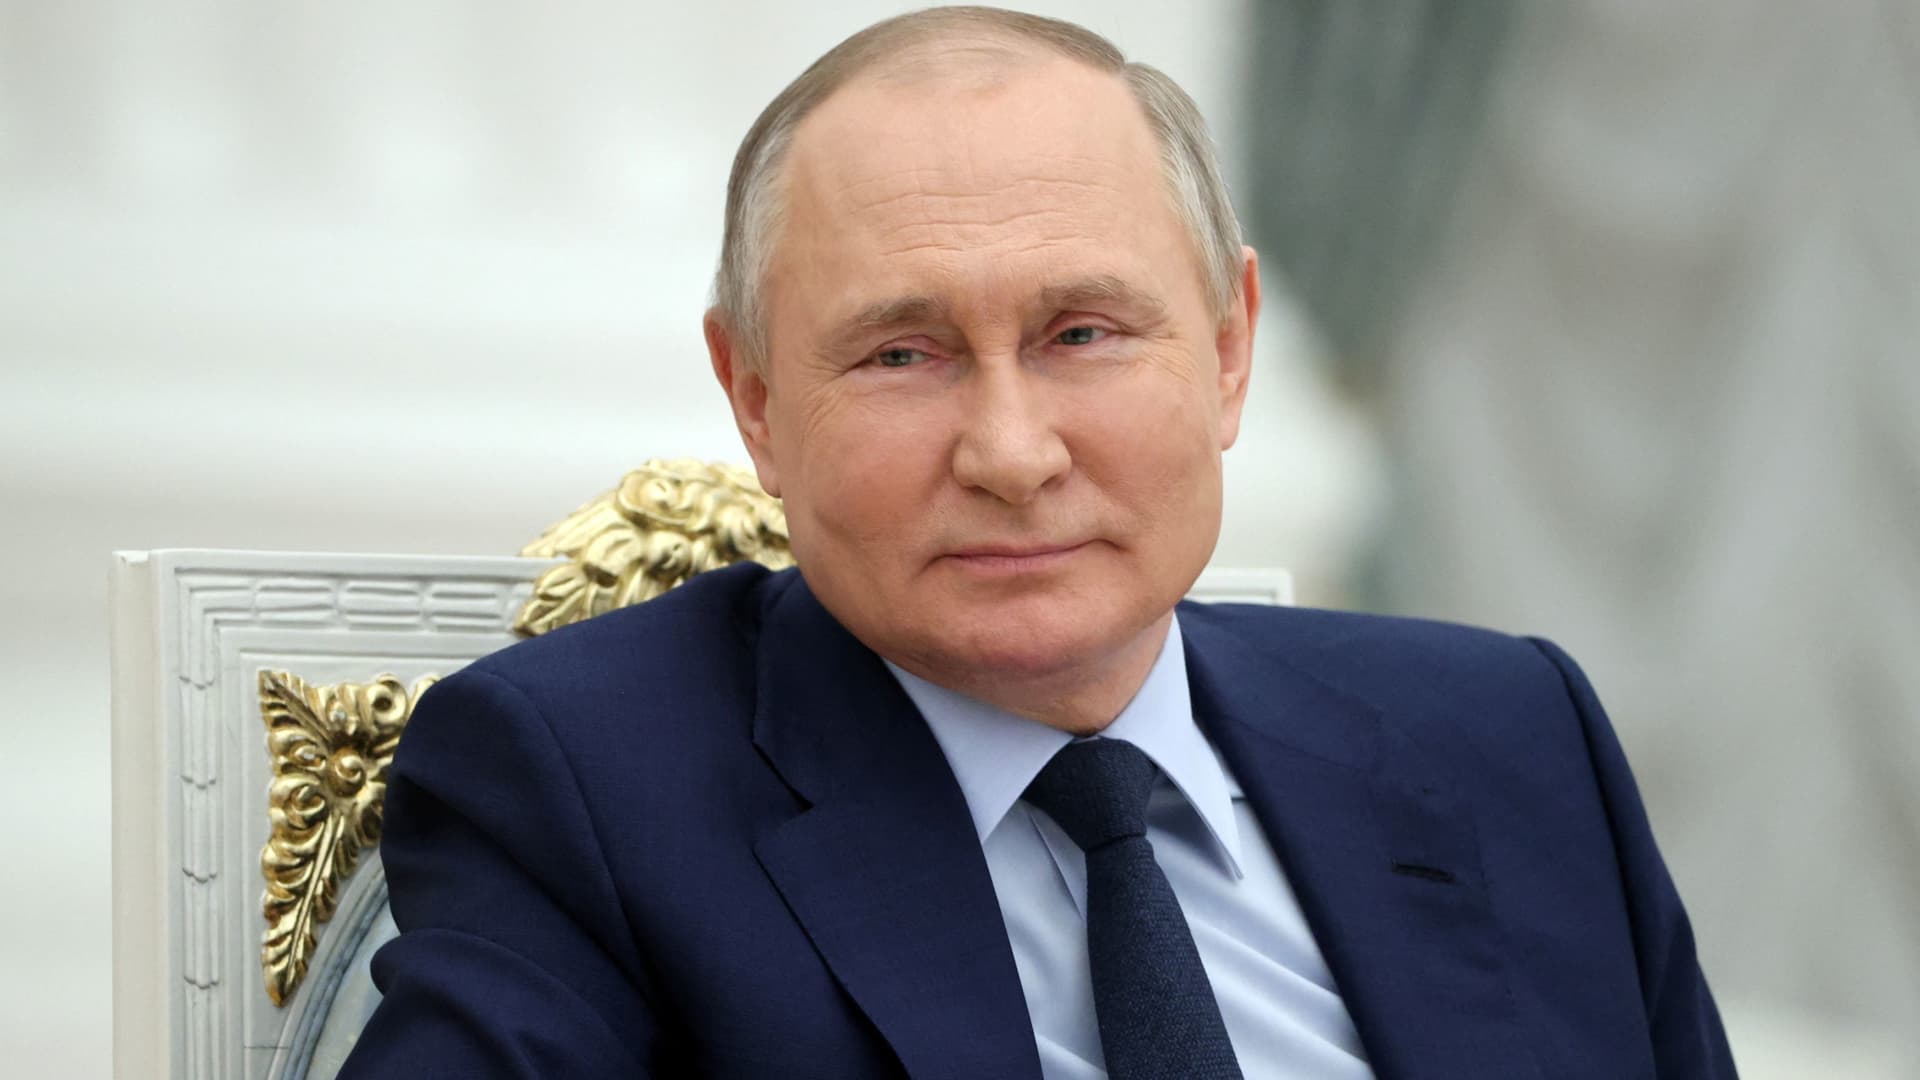 World leaders slam Putin’s attack on Odesa following sea corridor deal